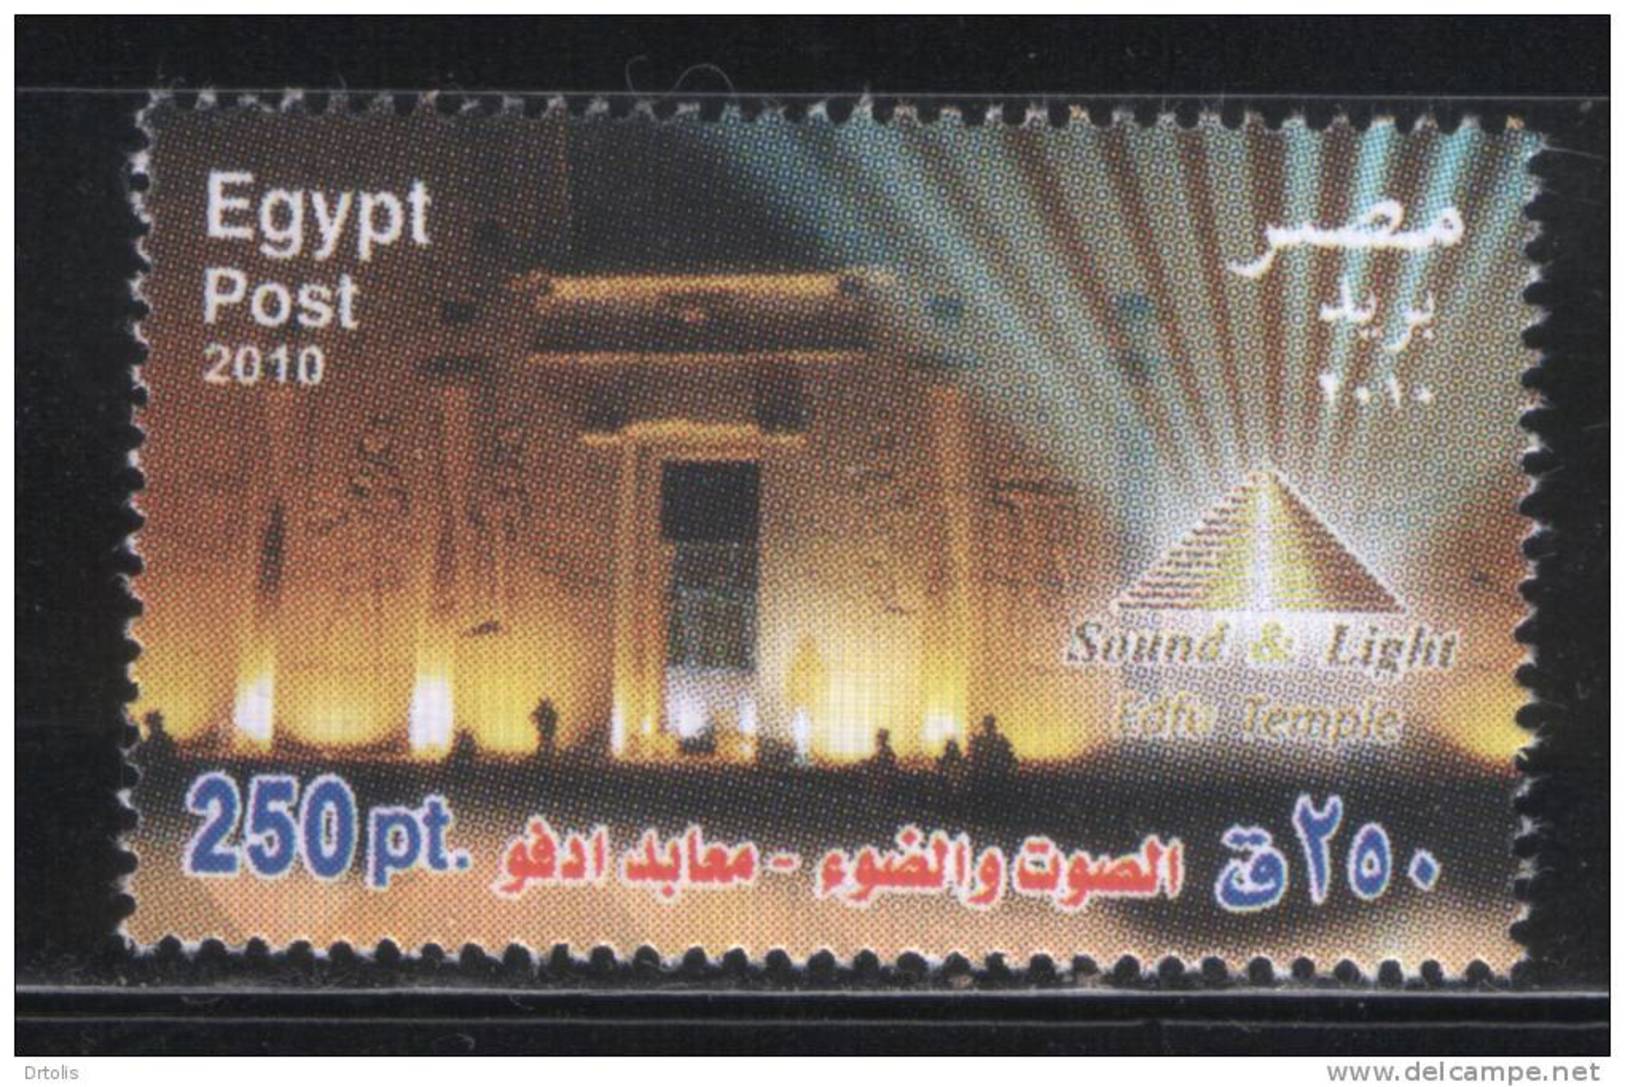 EGYPT / 2010 / SOUND & LIGHT / EDFU TEMPLE / EGYPTOLOGY / VF . - Ungebraucht